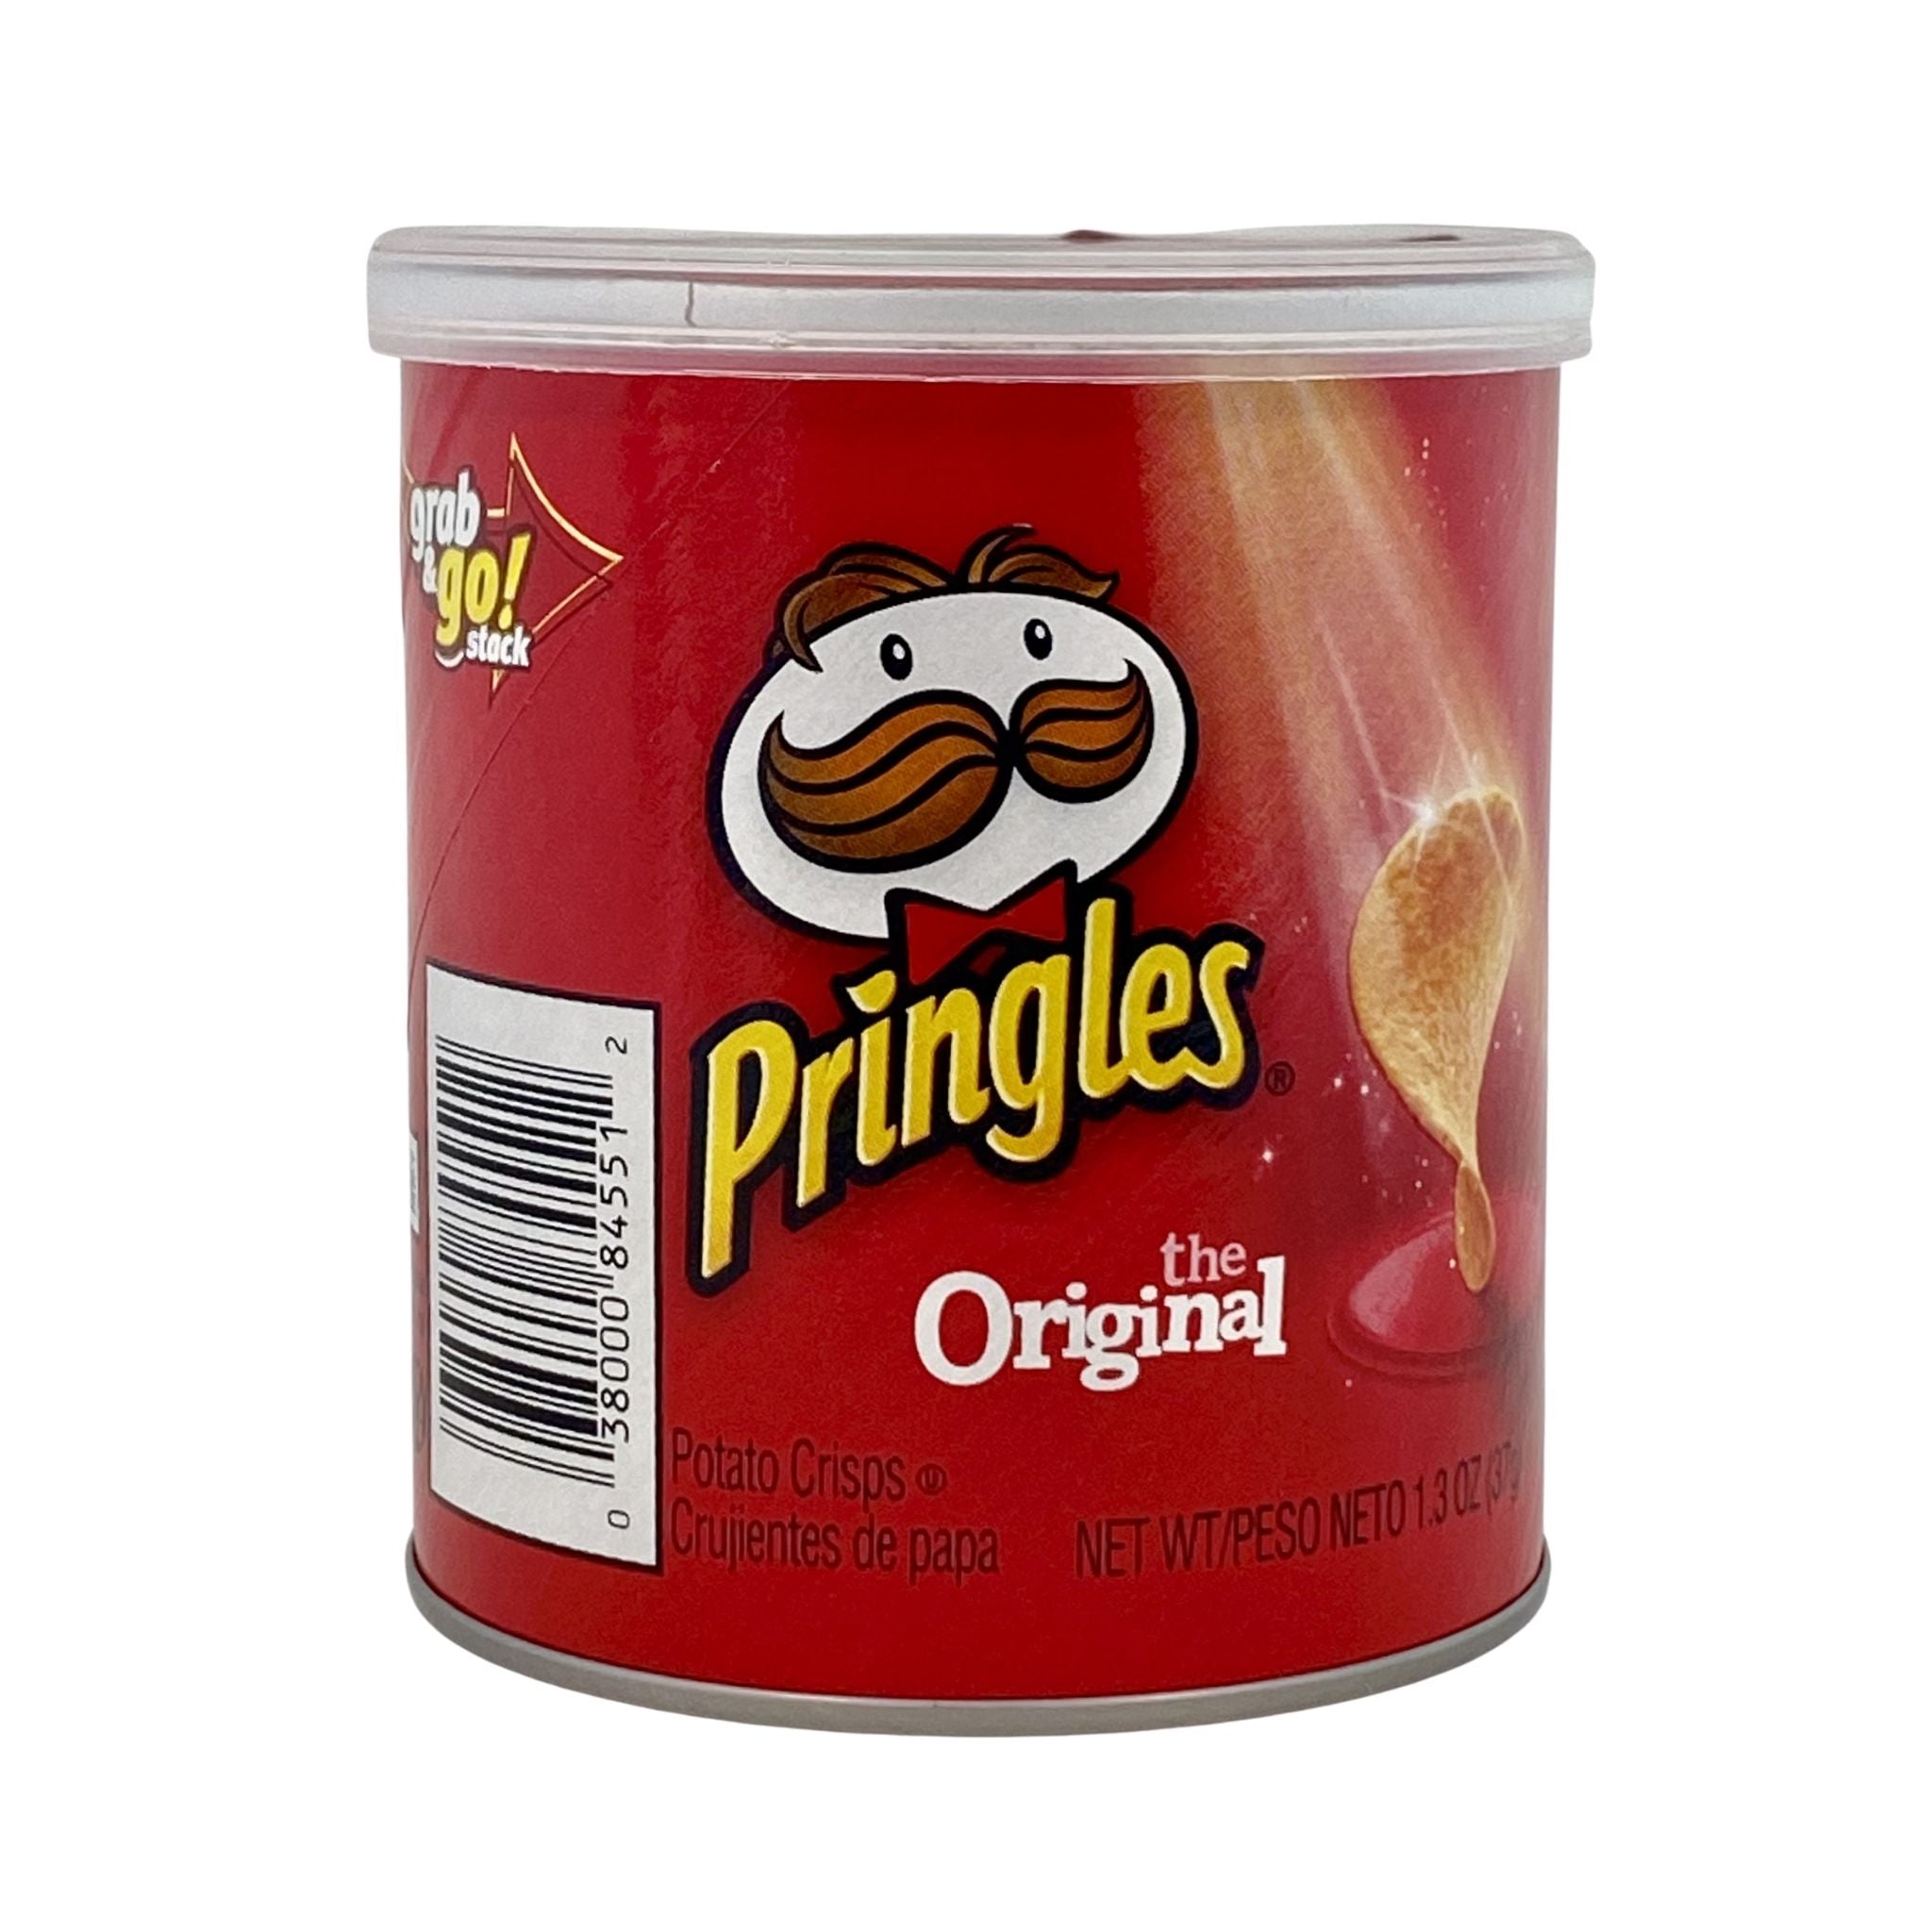 Pringles Original Potato Crisps 1.3 oz